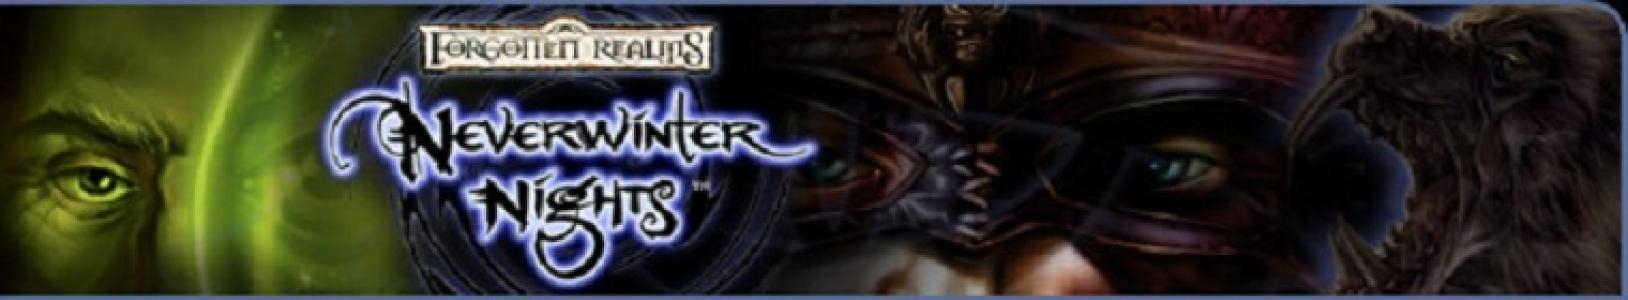 Neverwinter Nights banner